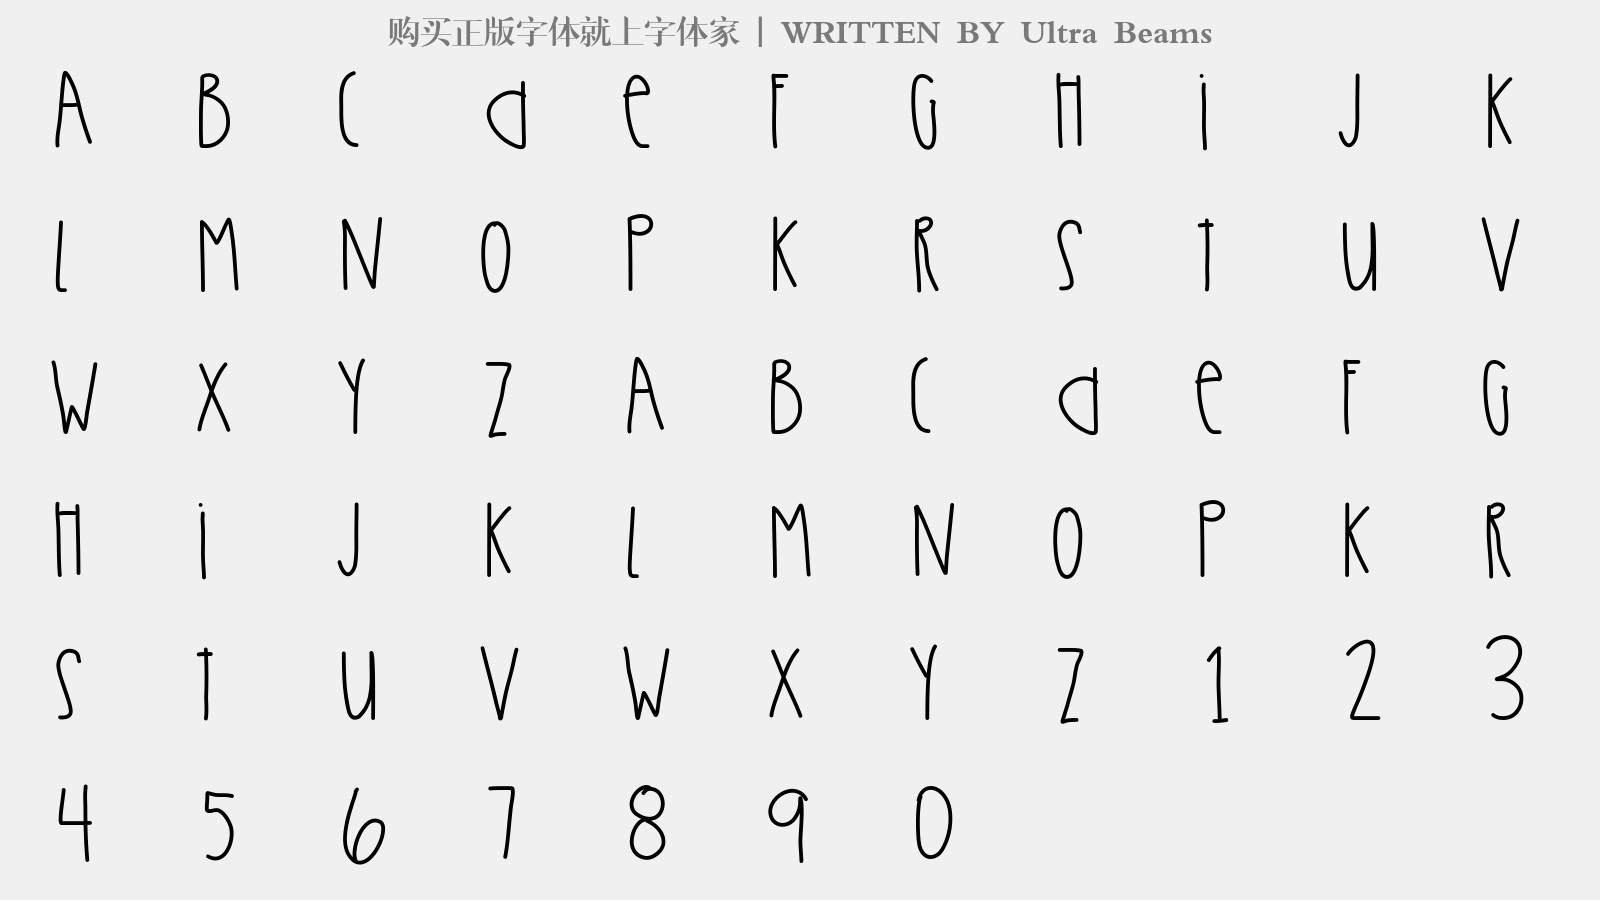 Ultra Beams - 大写字母/小写字母/数字